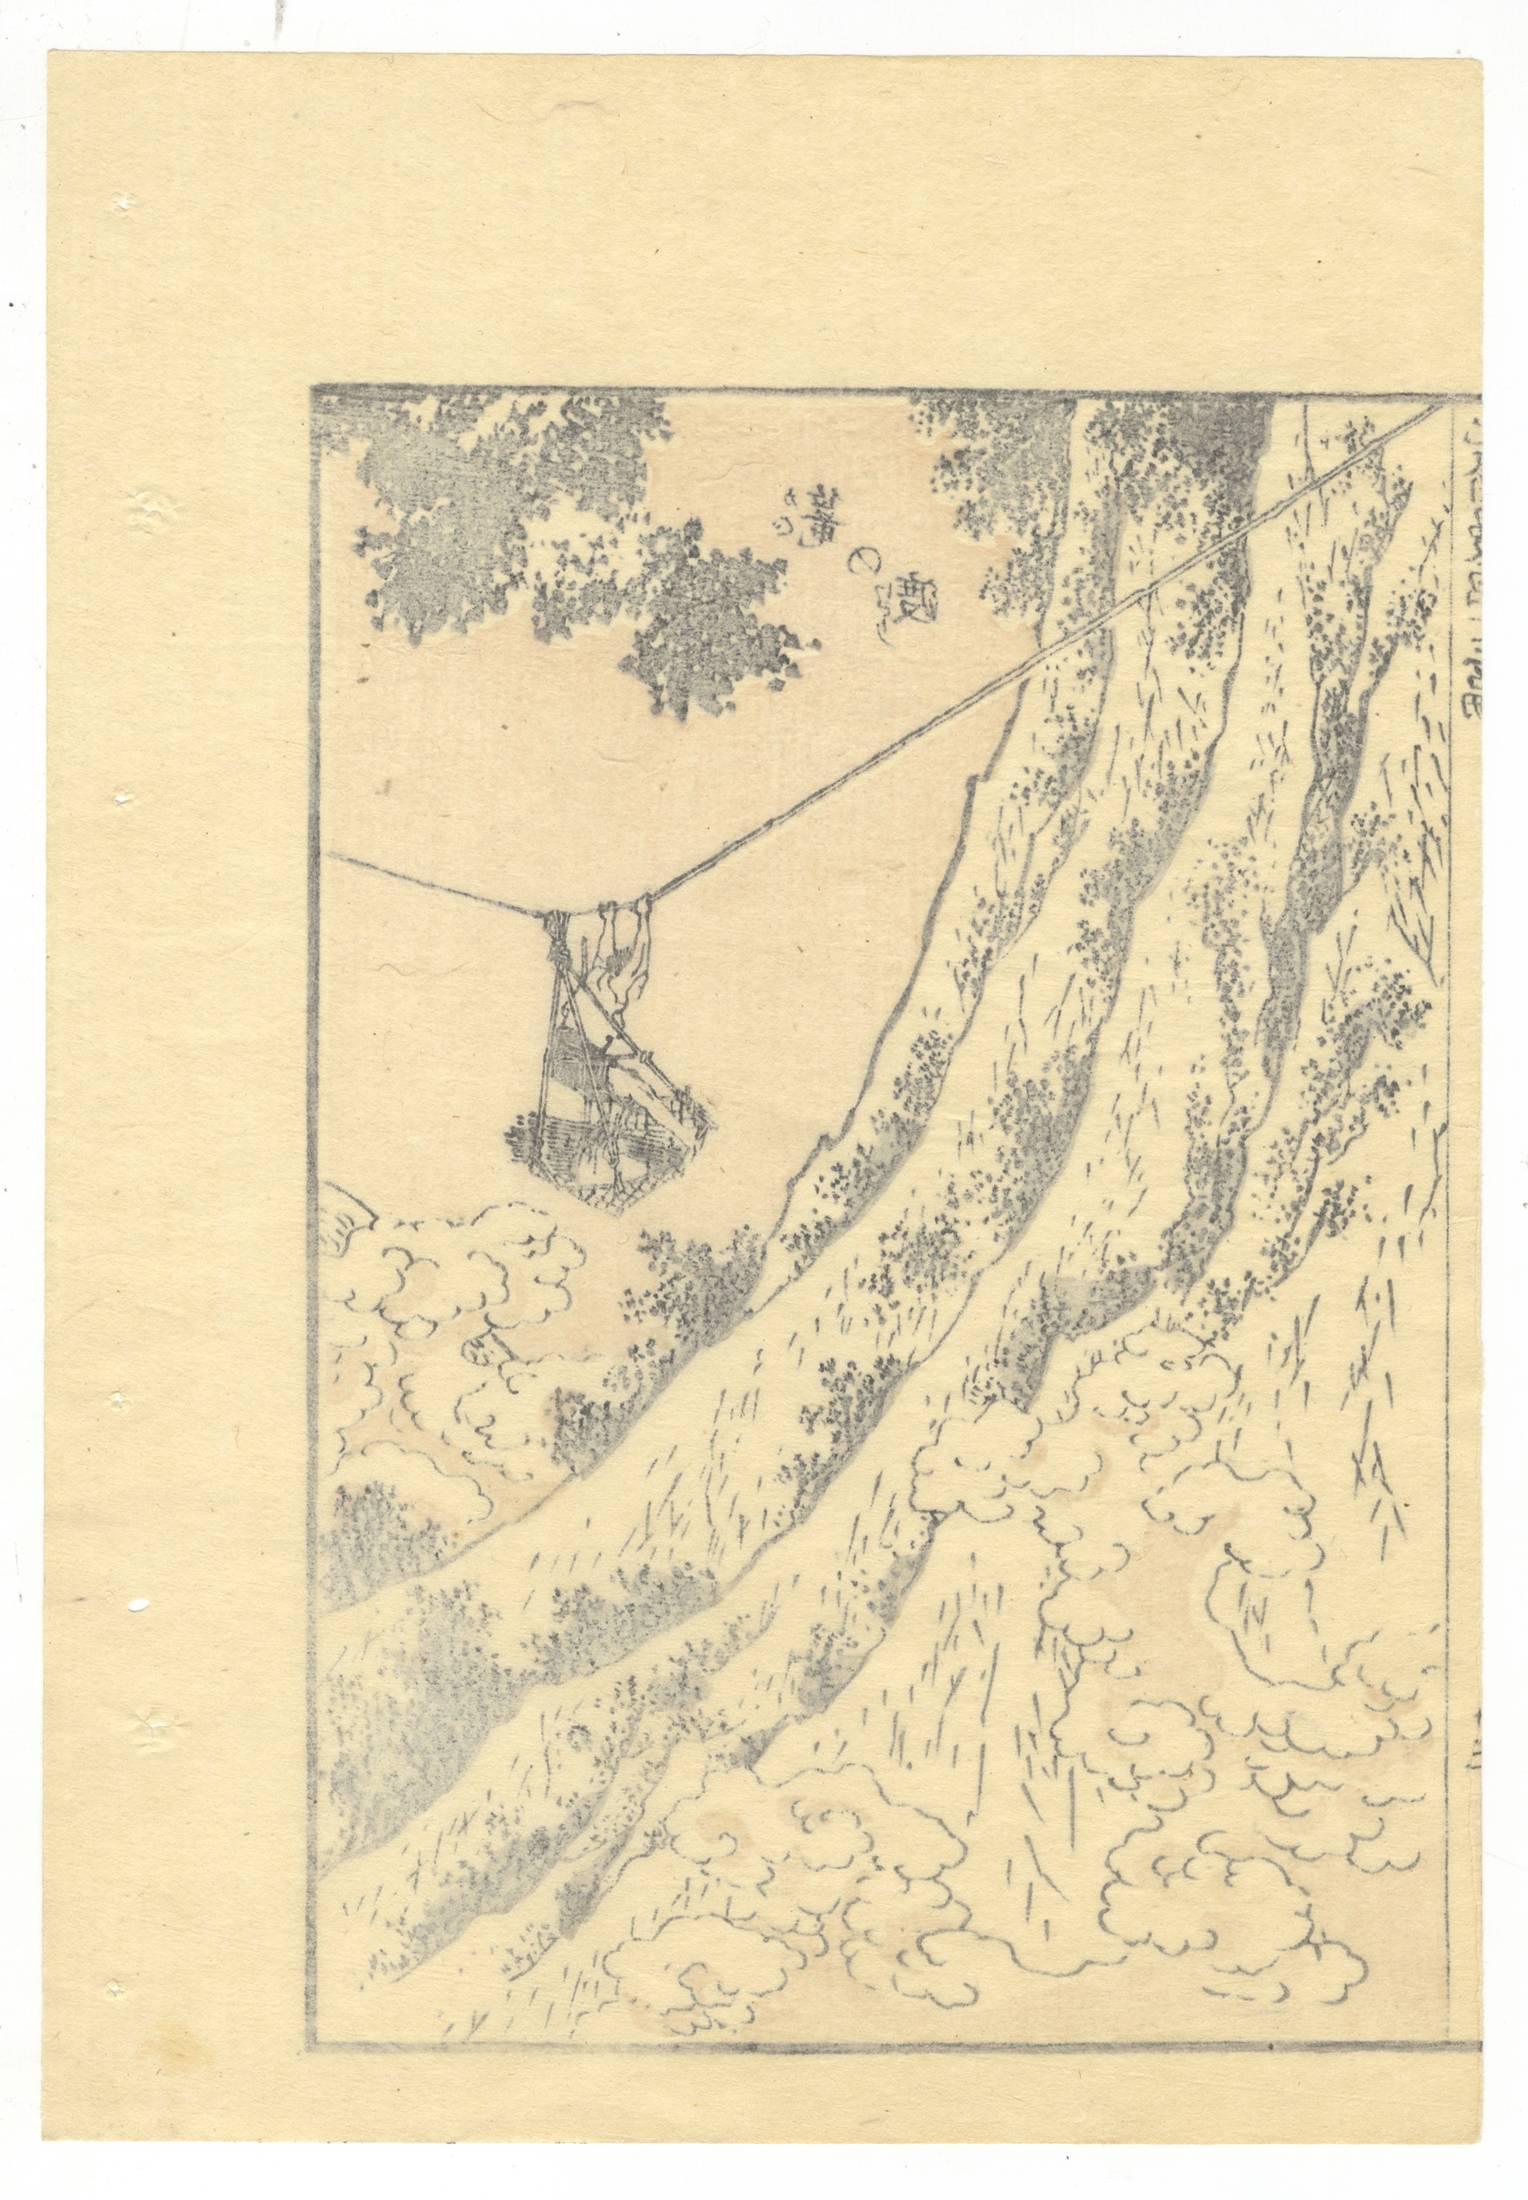 Hand-printed on traditional Japanese washi paper (mulberry tree paper).

Artist: Katsushika Hokusai
Title: Basket crossing
Series: Hokusai Manga volume 3
Publisher: Toheki-do
Published: 1815

This print is from the Hokusai Manga (sketches)